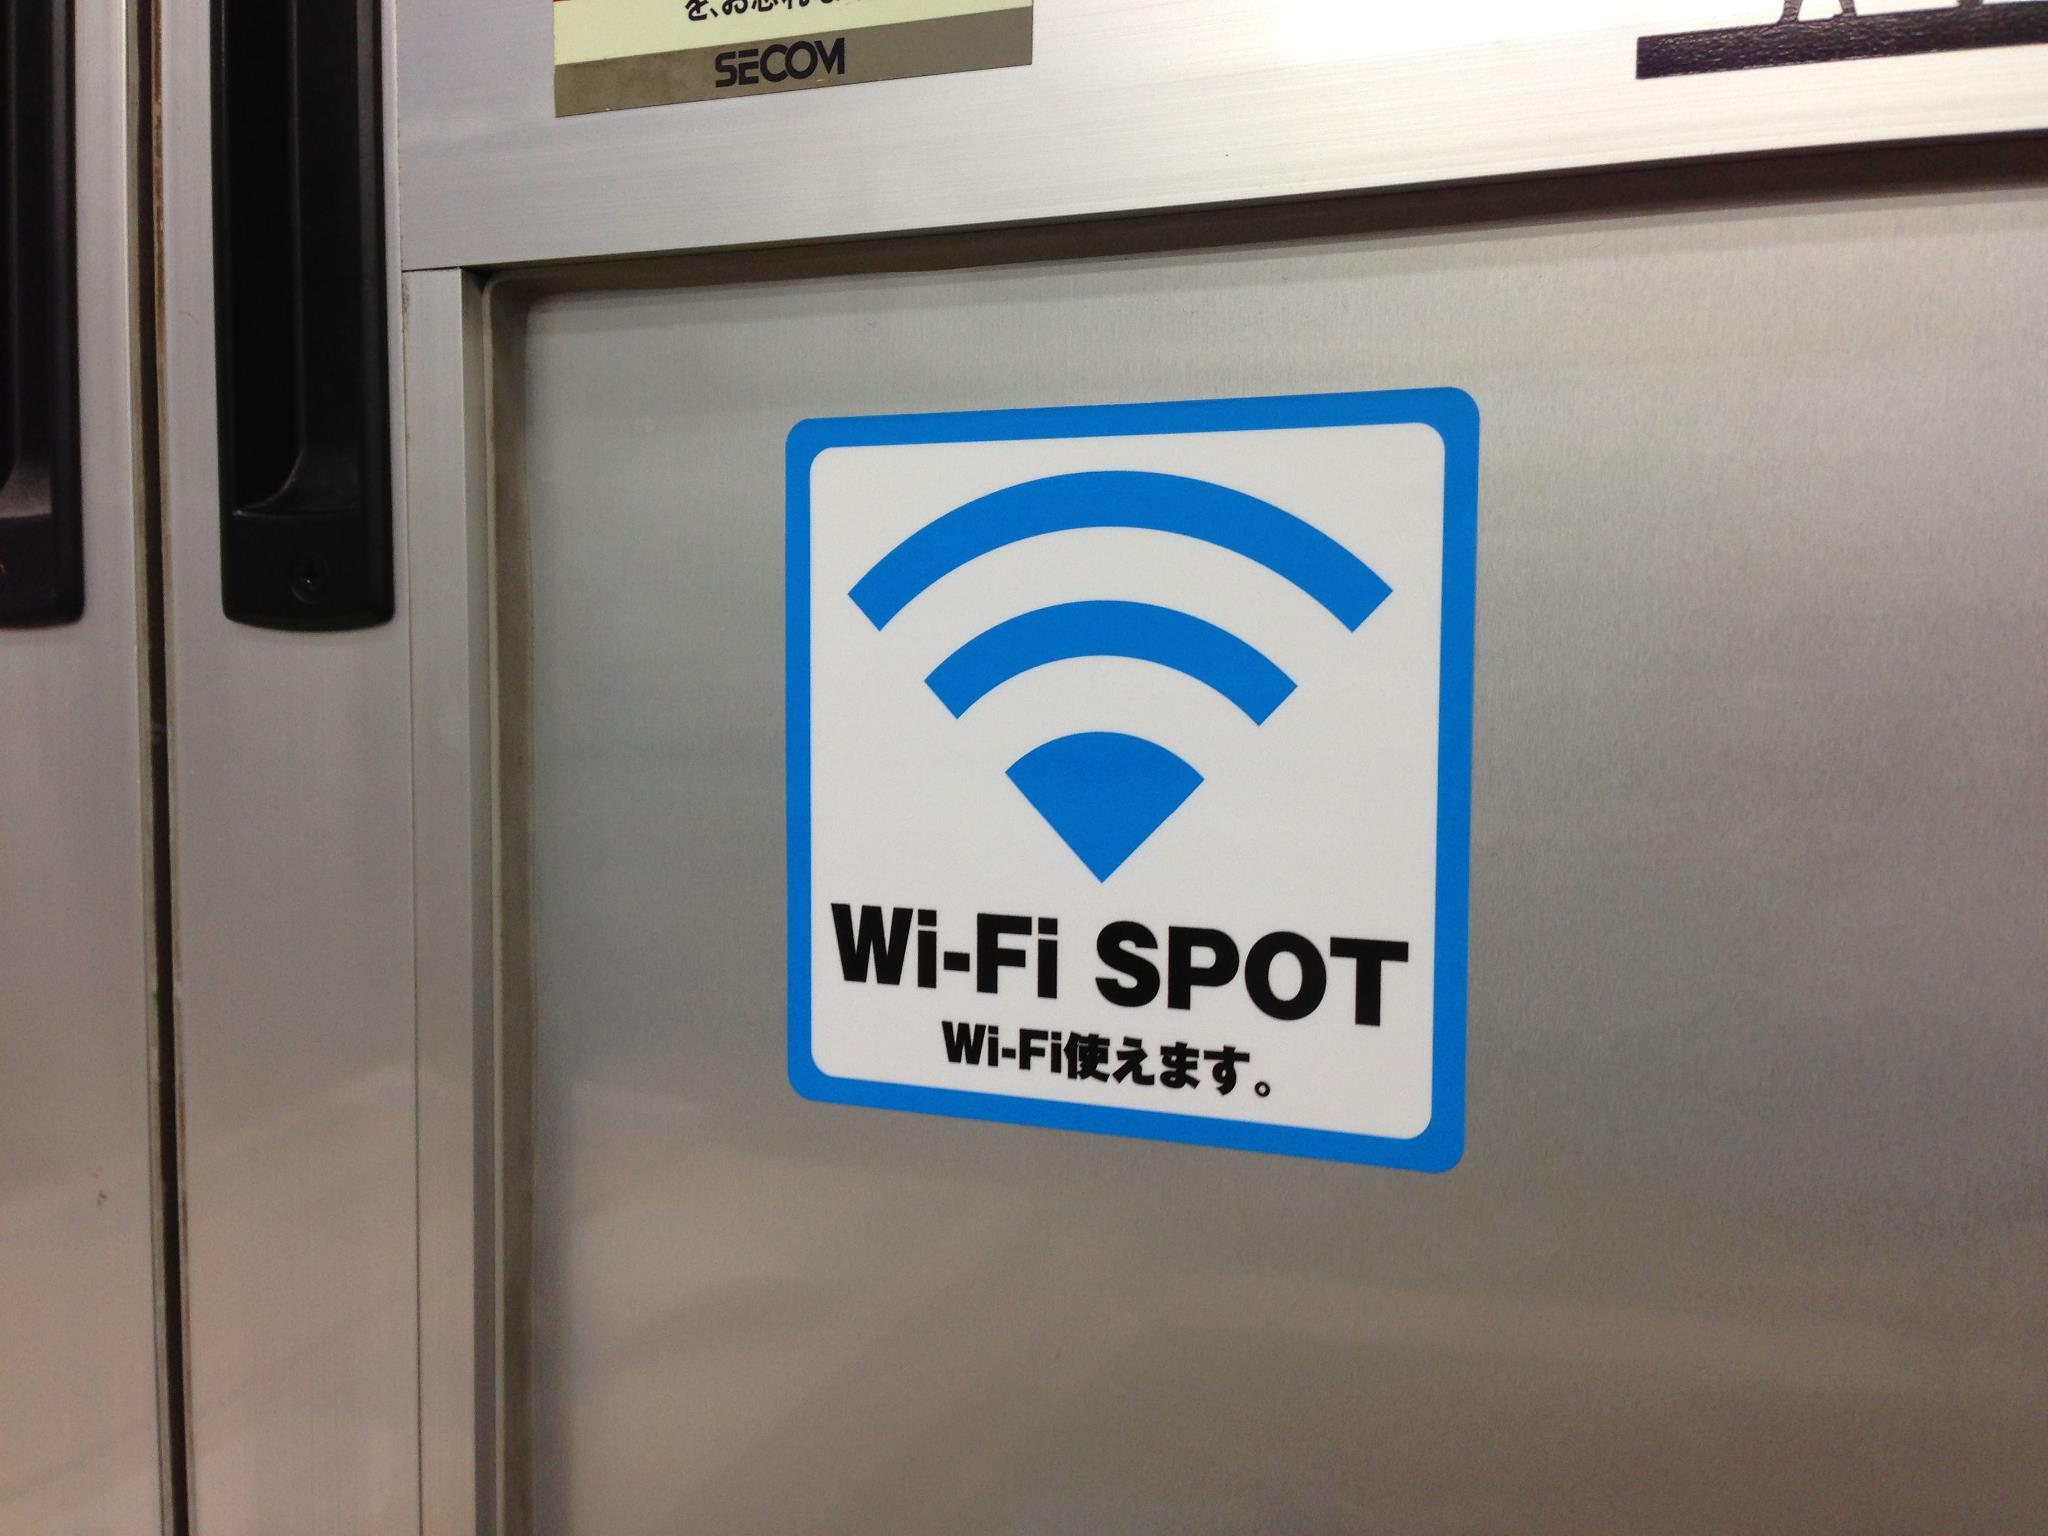 Wi-Fi使えます表示ステッカー001 x 5枚セット